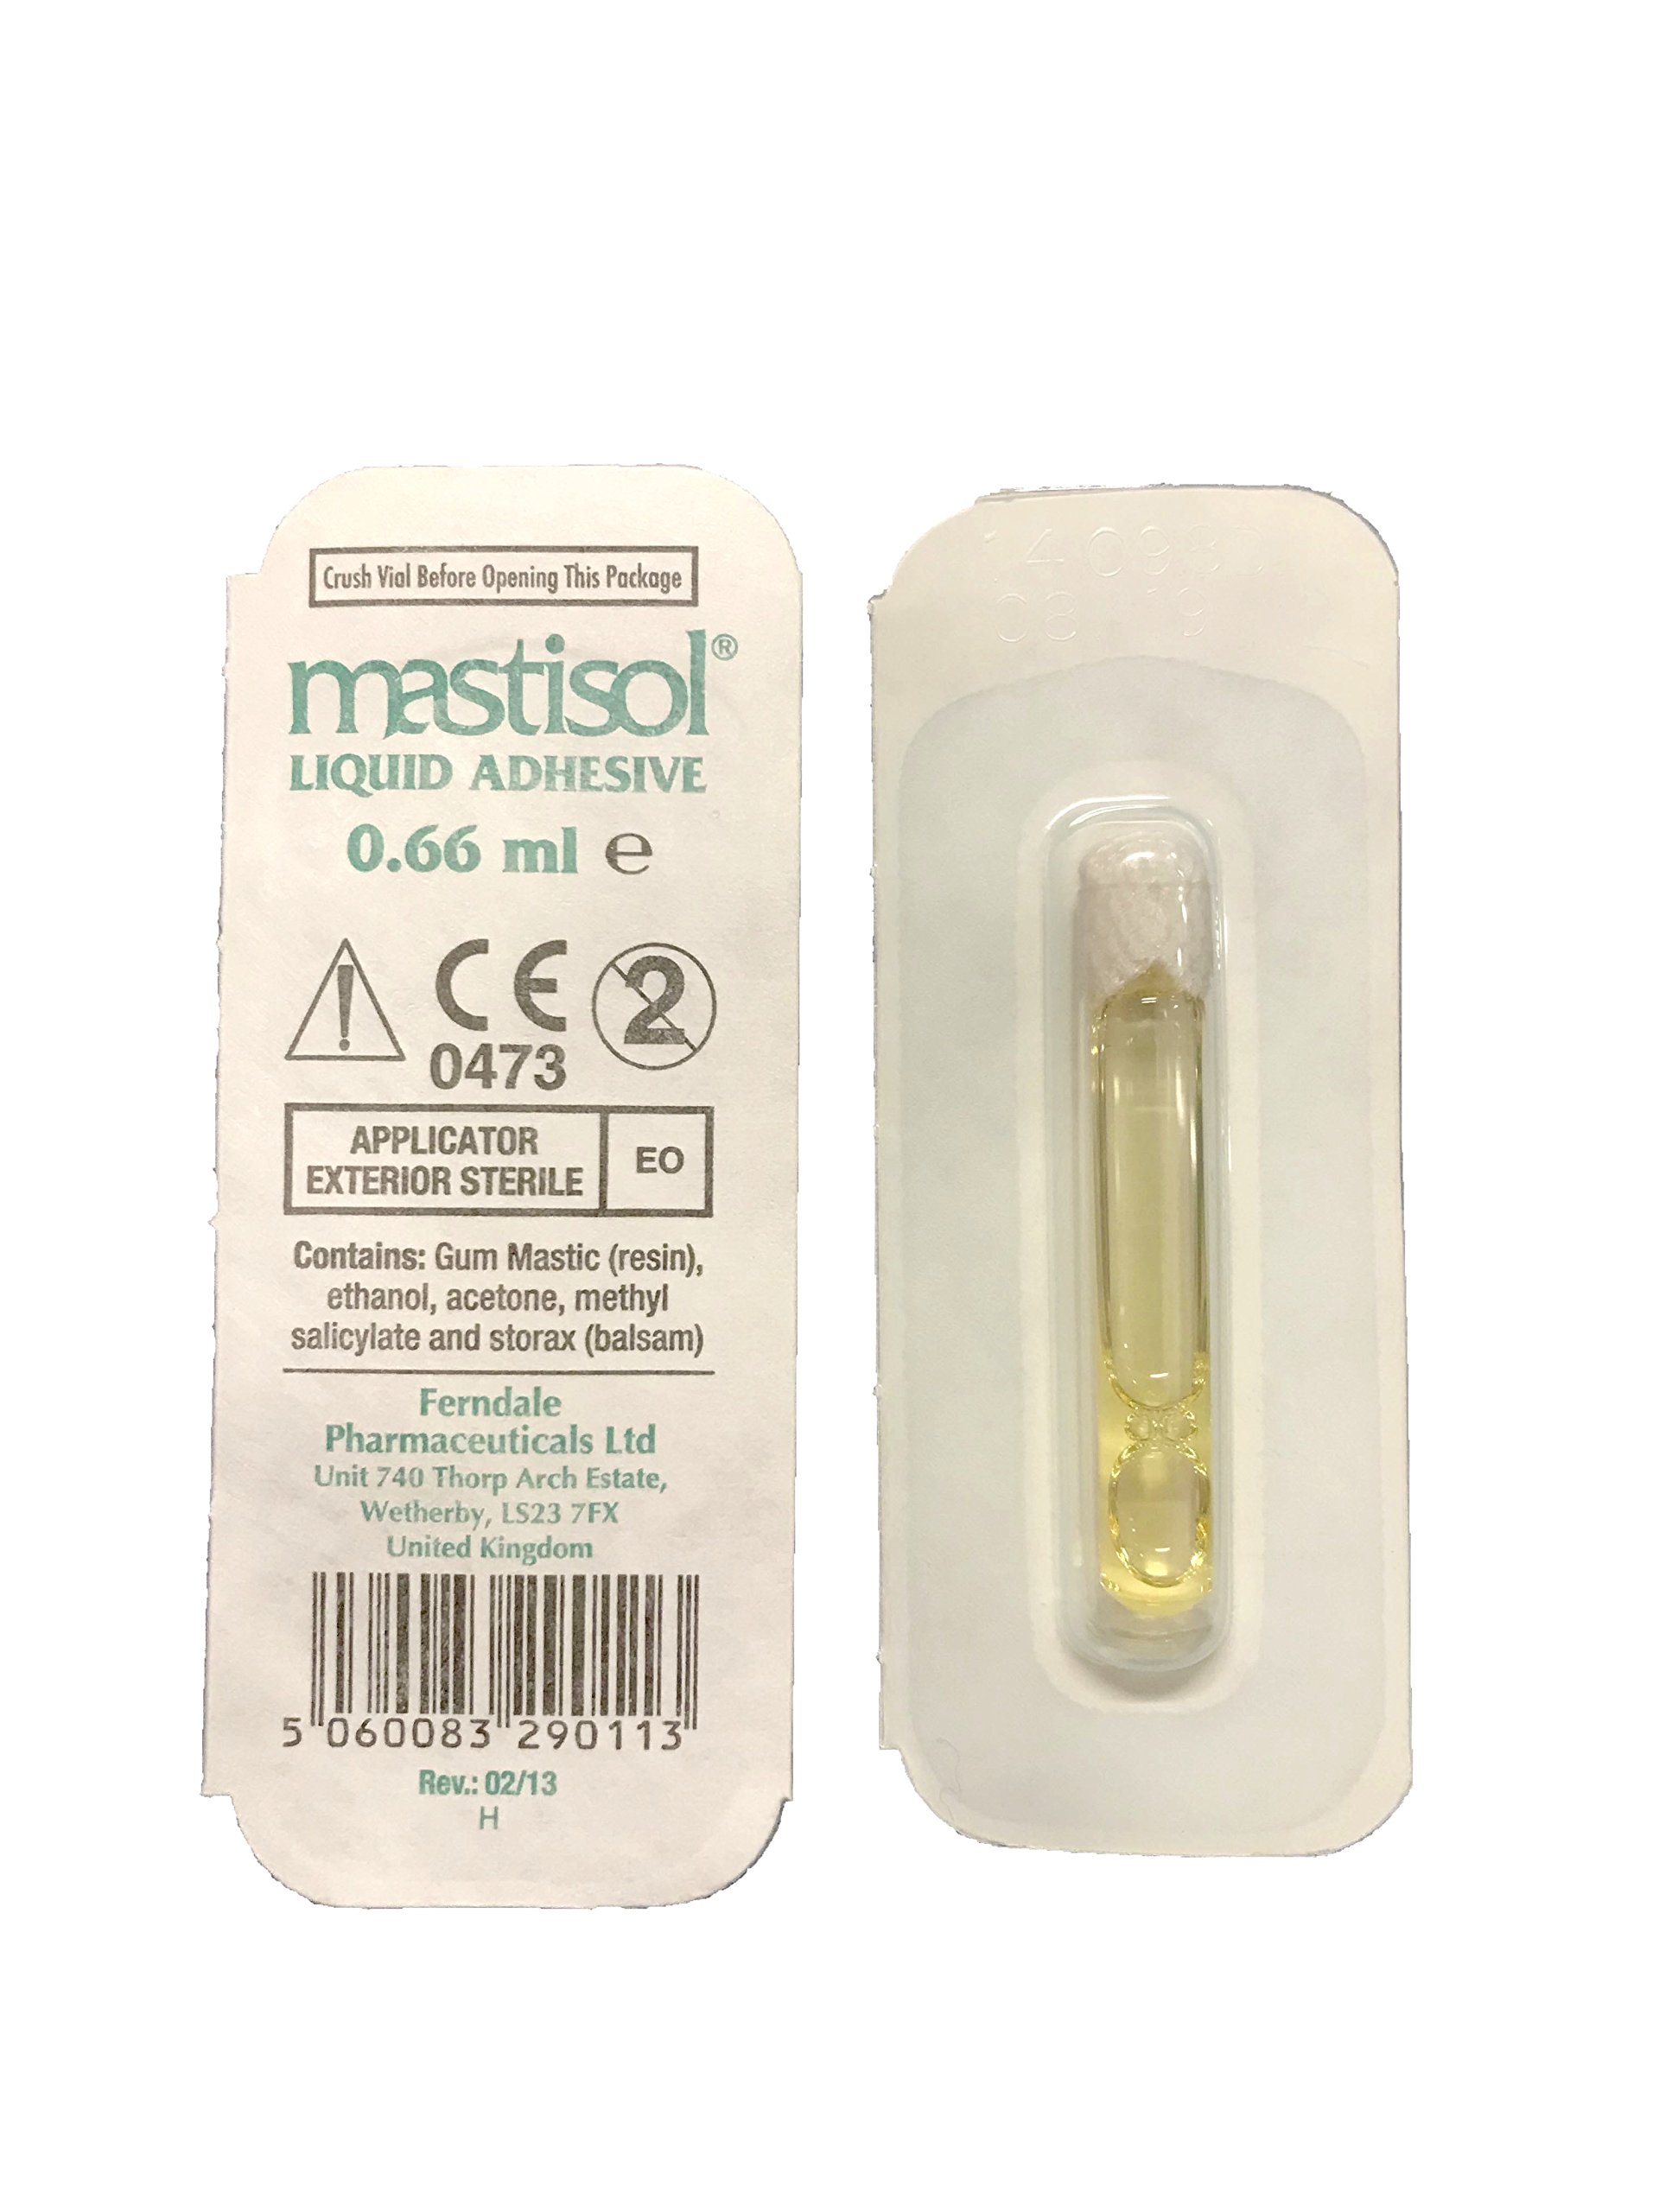 How To Apply Mastisol Liquid Adhesive